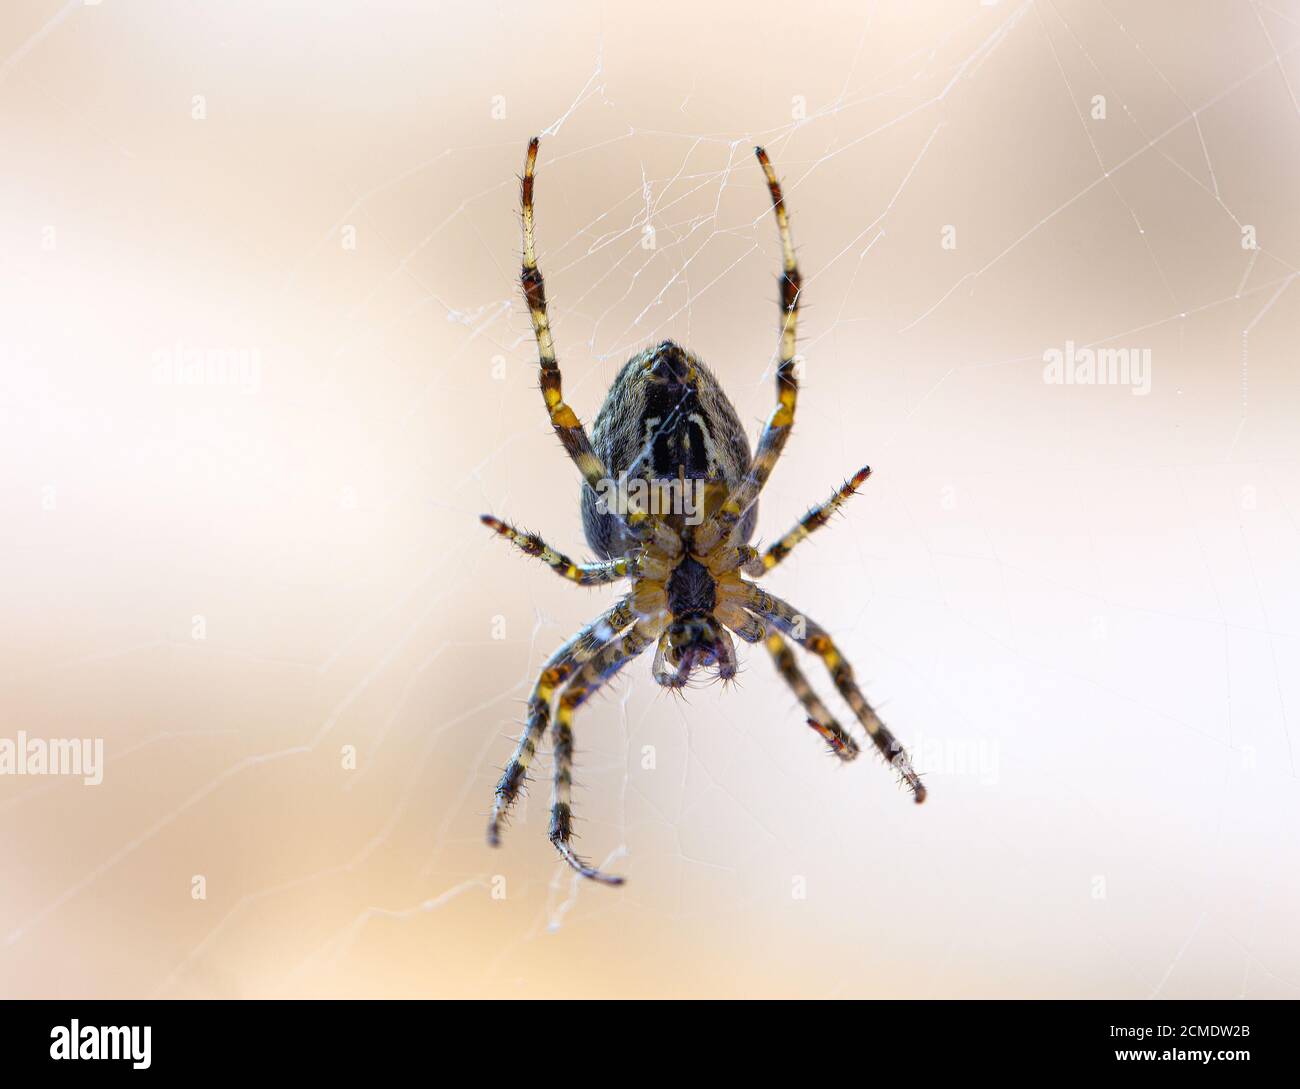 Common garden spider. Stock Photo